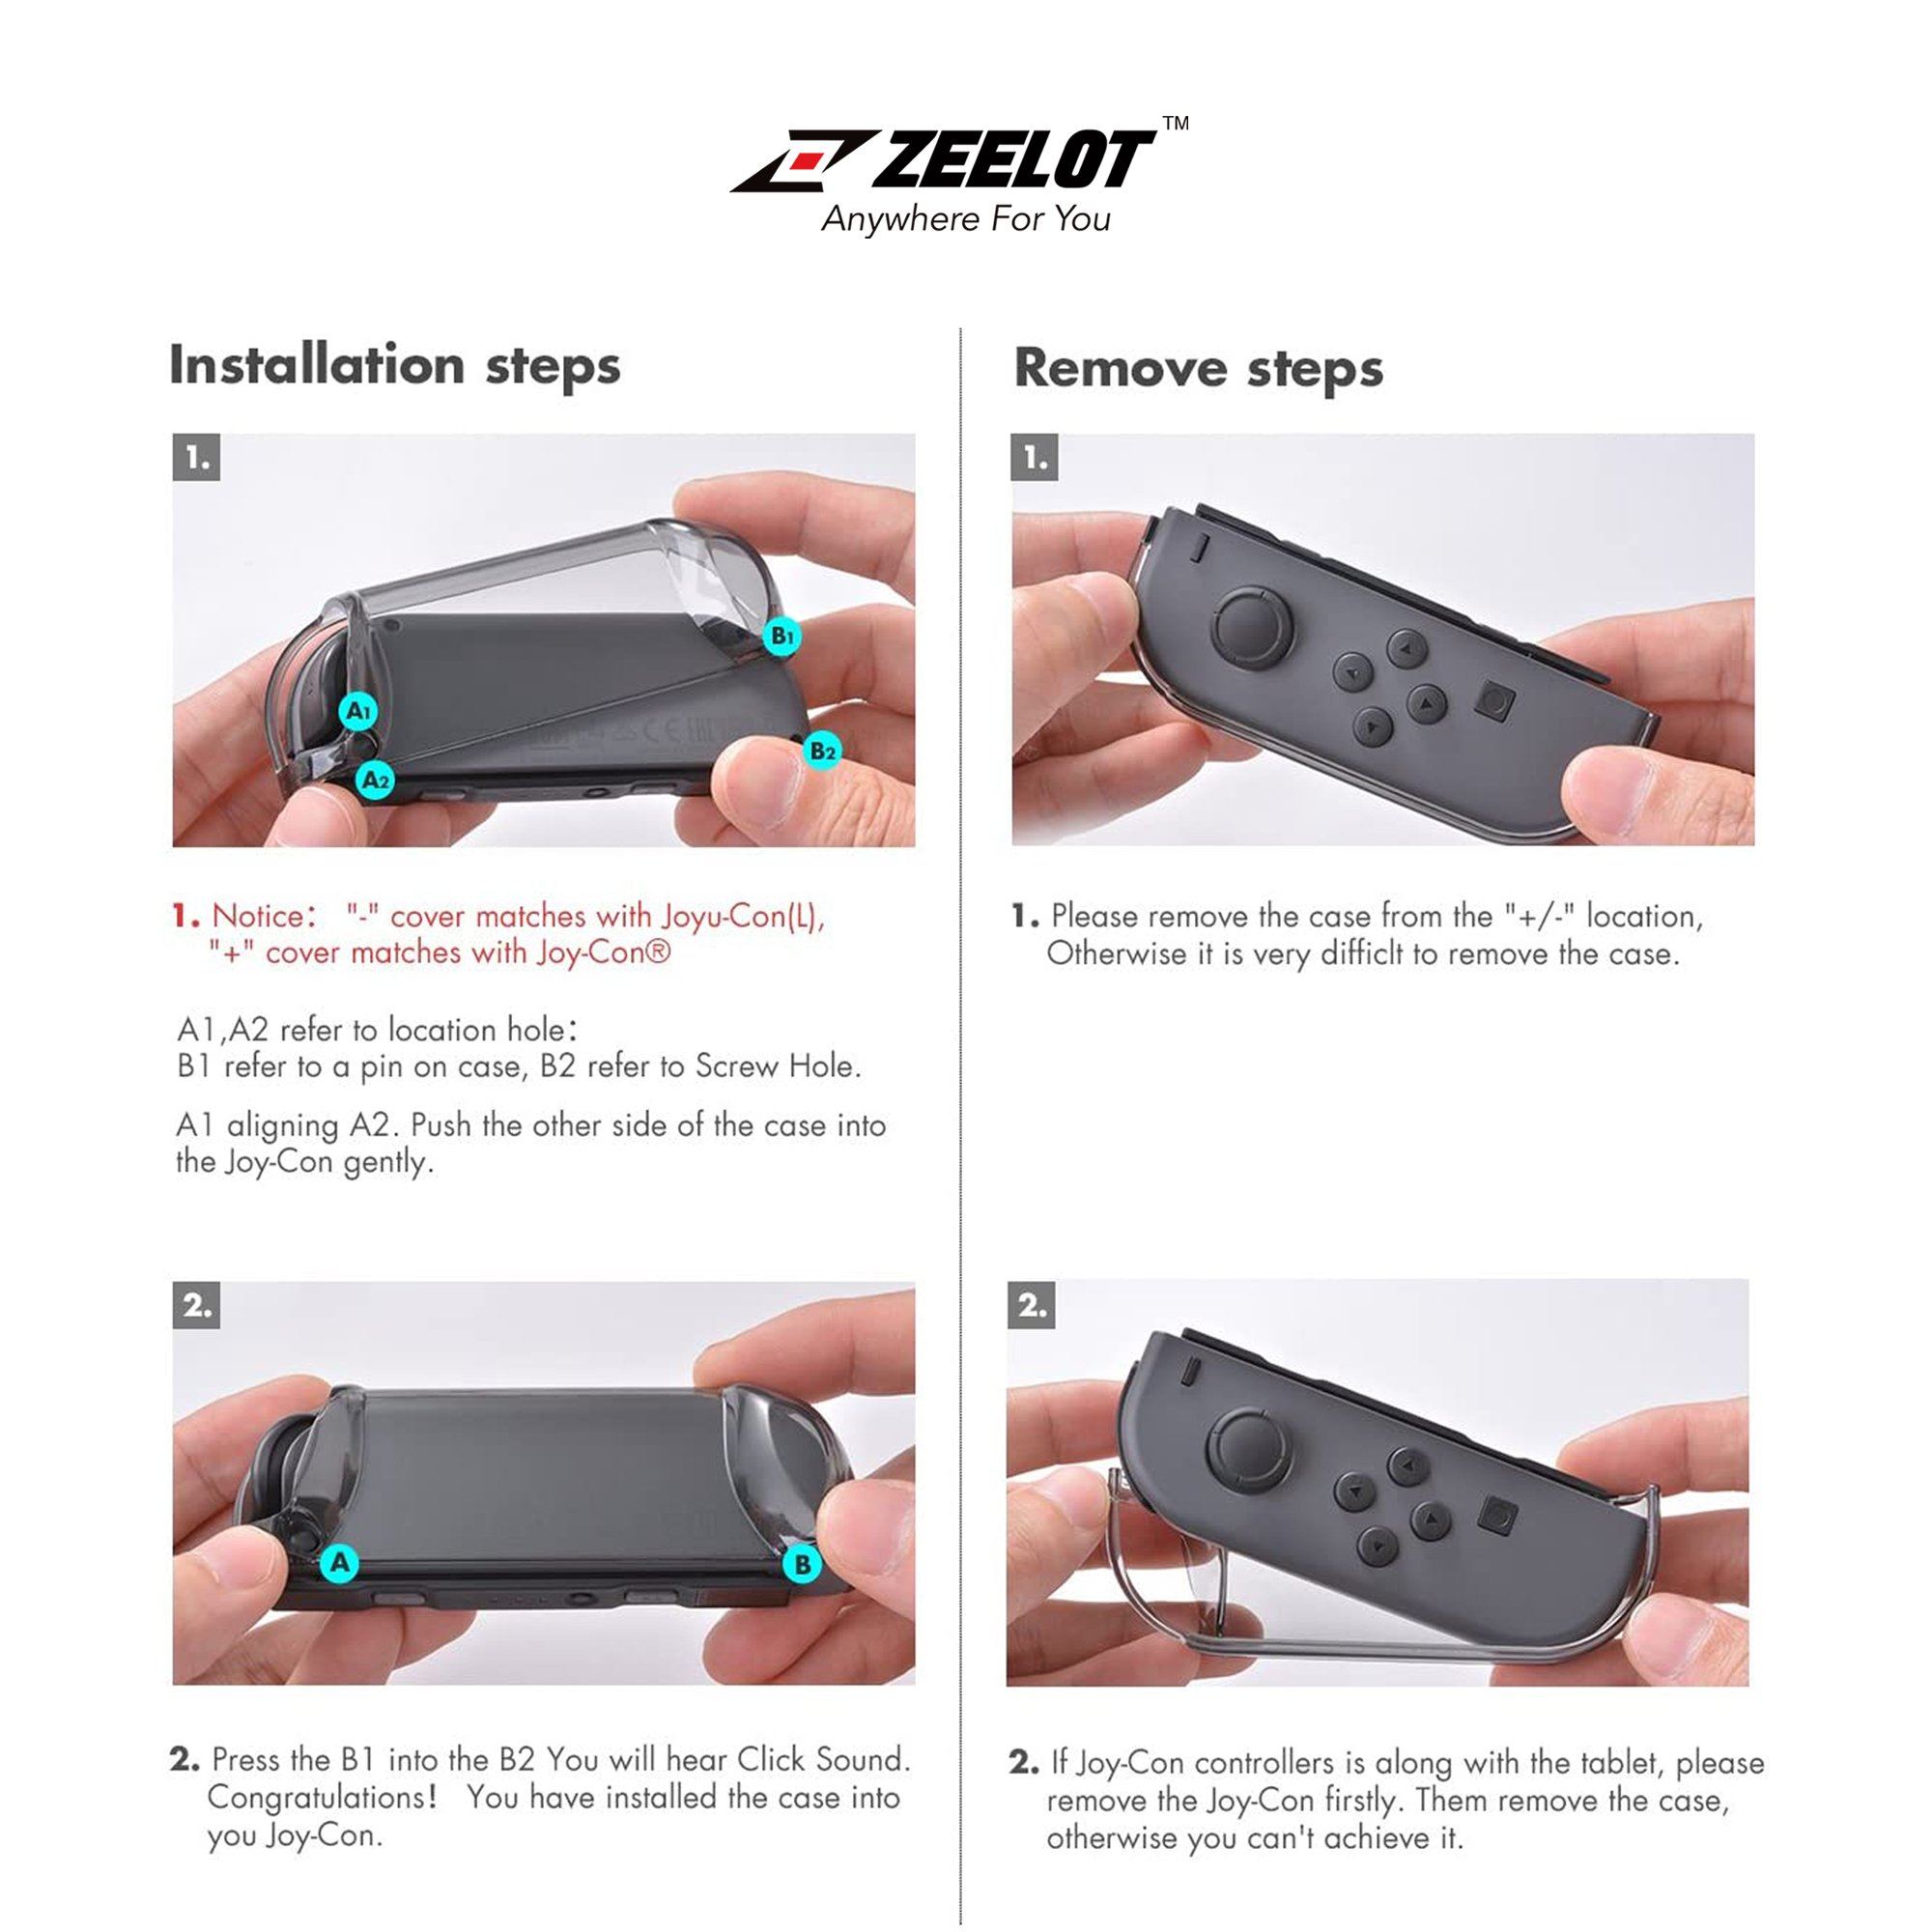 ZEELOT PureClear Protection Case for Nintendo Switch (Set) Switch Nintendo ZEELOT 